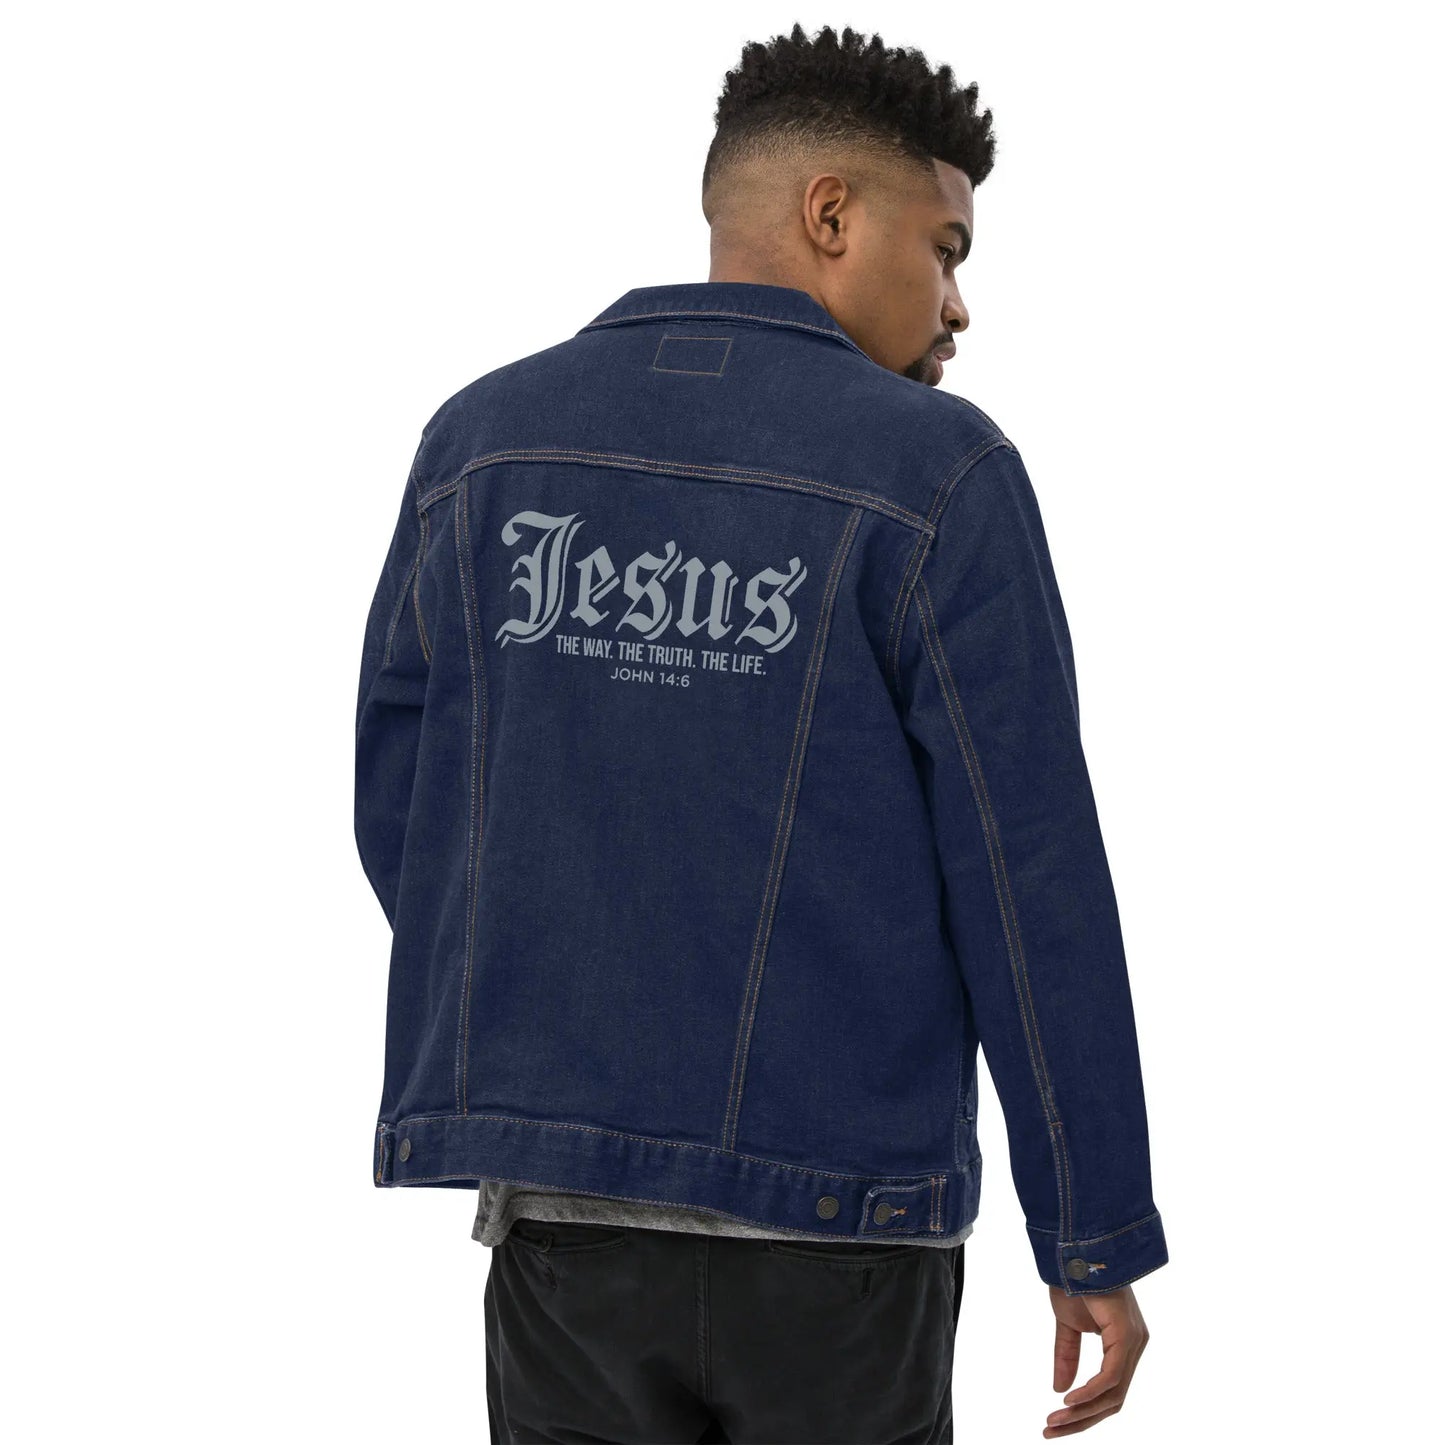 Jesus The Way Truth Life denim jacket Amazing Faith Designs